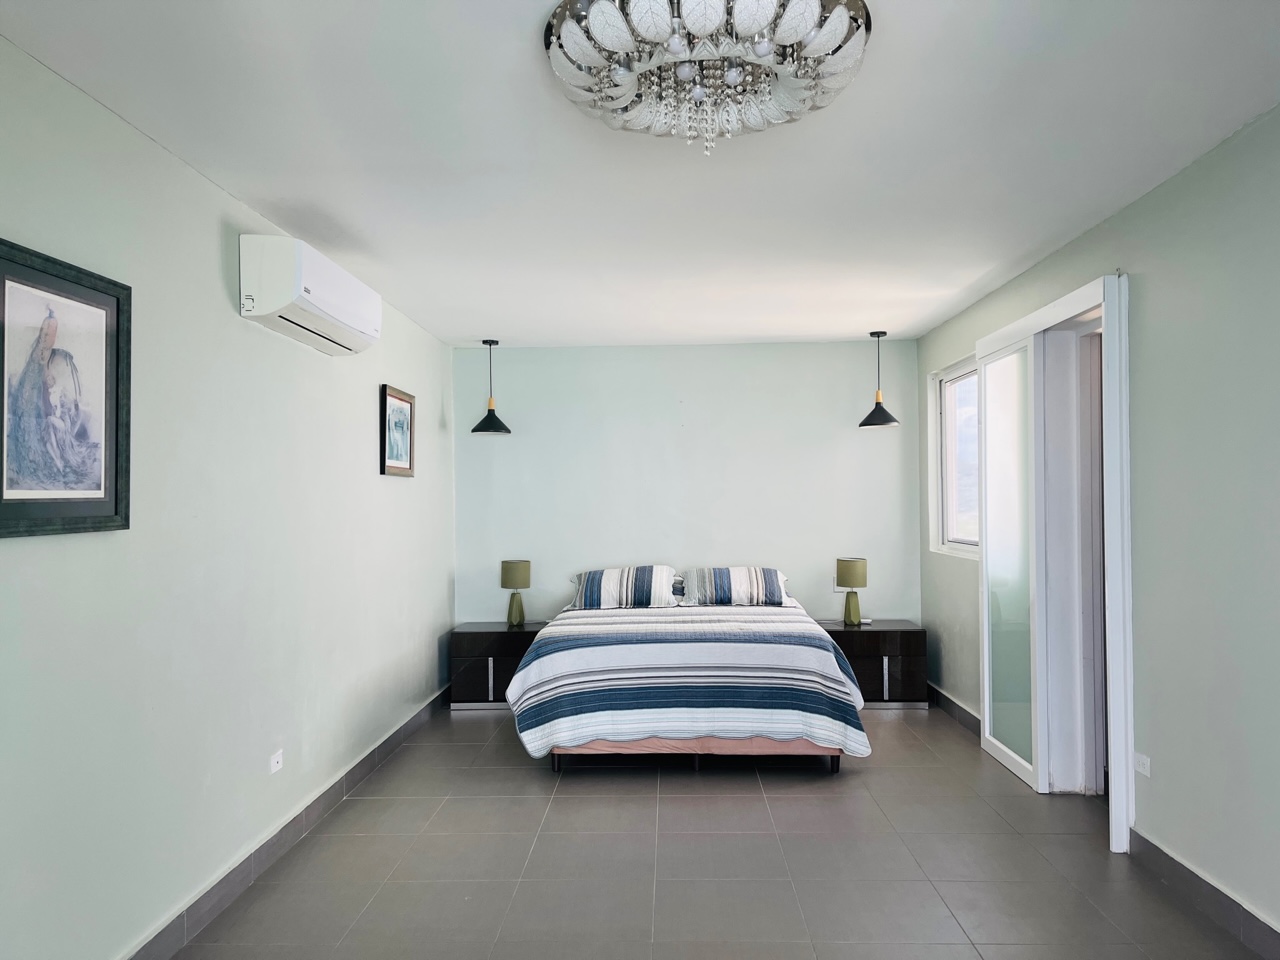 4-Bedroom Condo for Sale in PH Biltmore, Nueva Gorgona, Panama | 2-Storey Furnished Penthouse | Property ID: PLS-19833